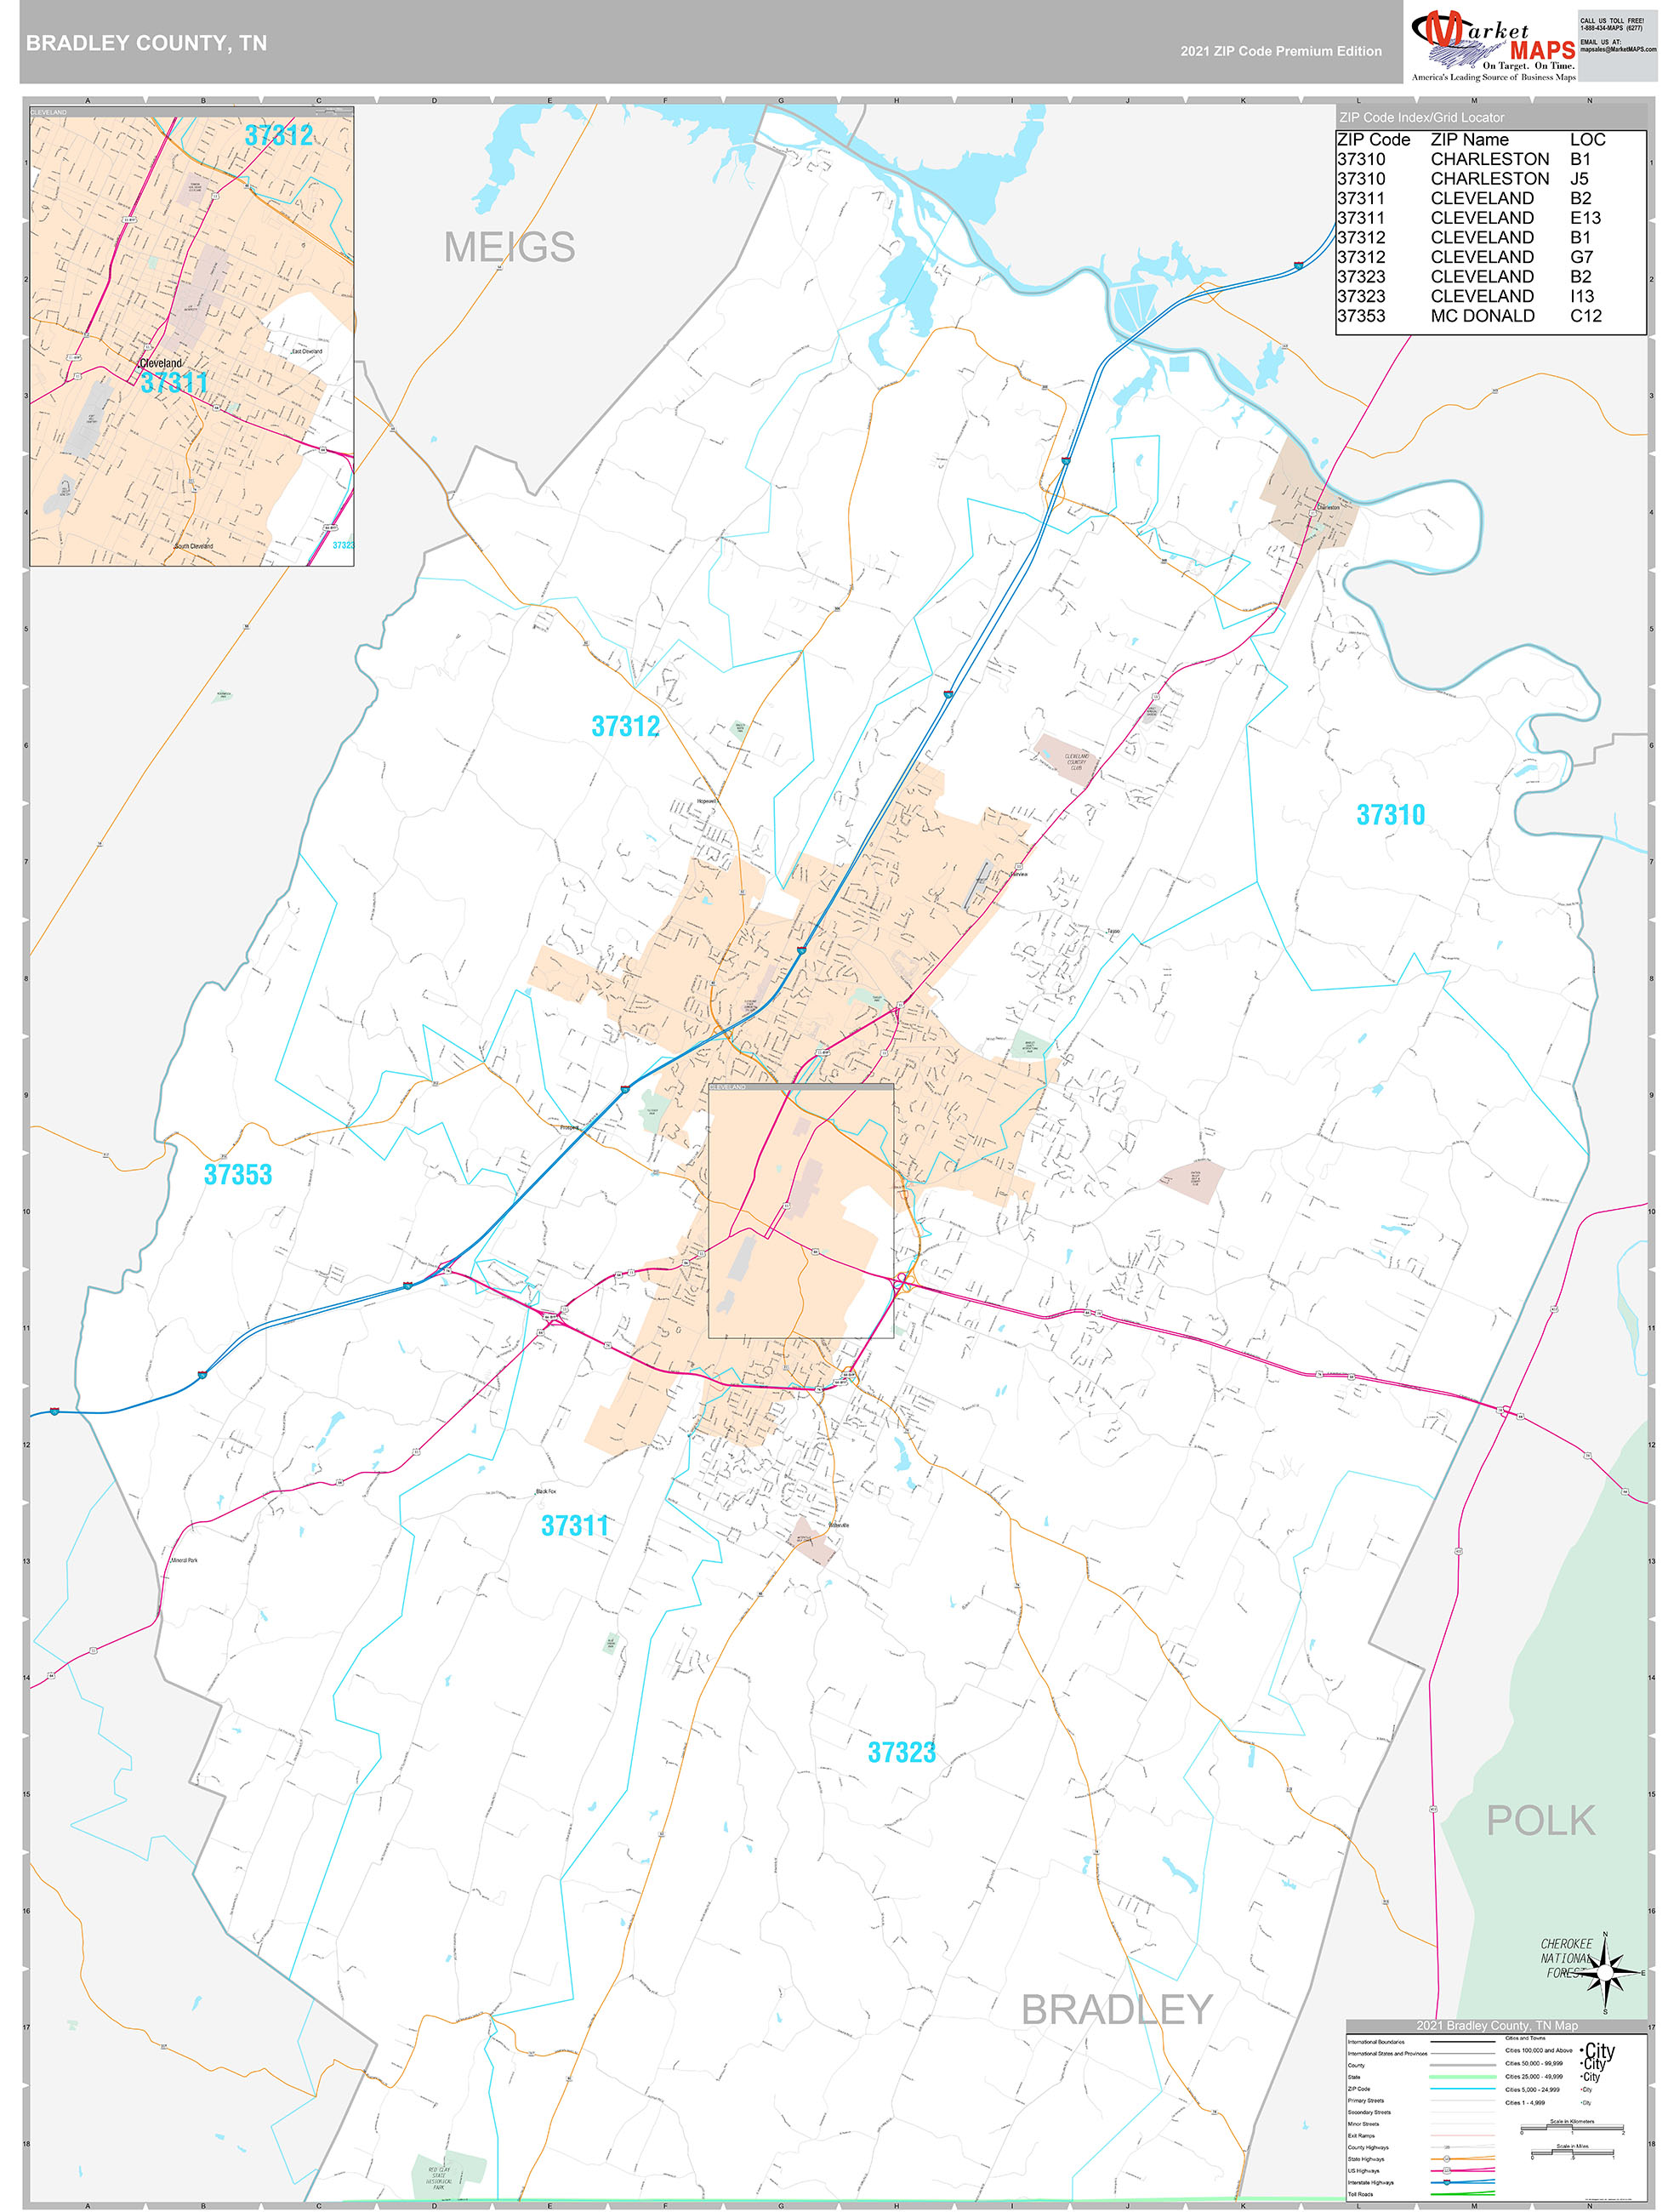 Bradley County, TN Wall Map Premium Style by MarketMAPS - MapSales